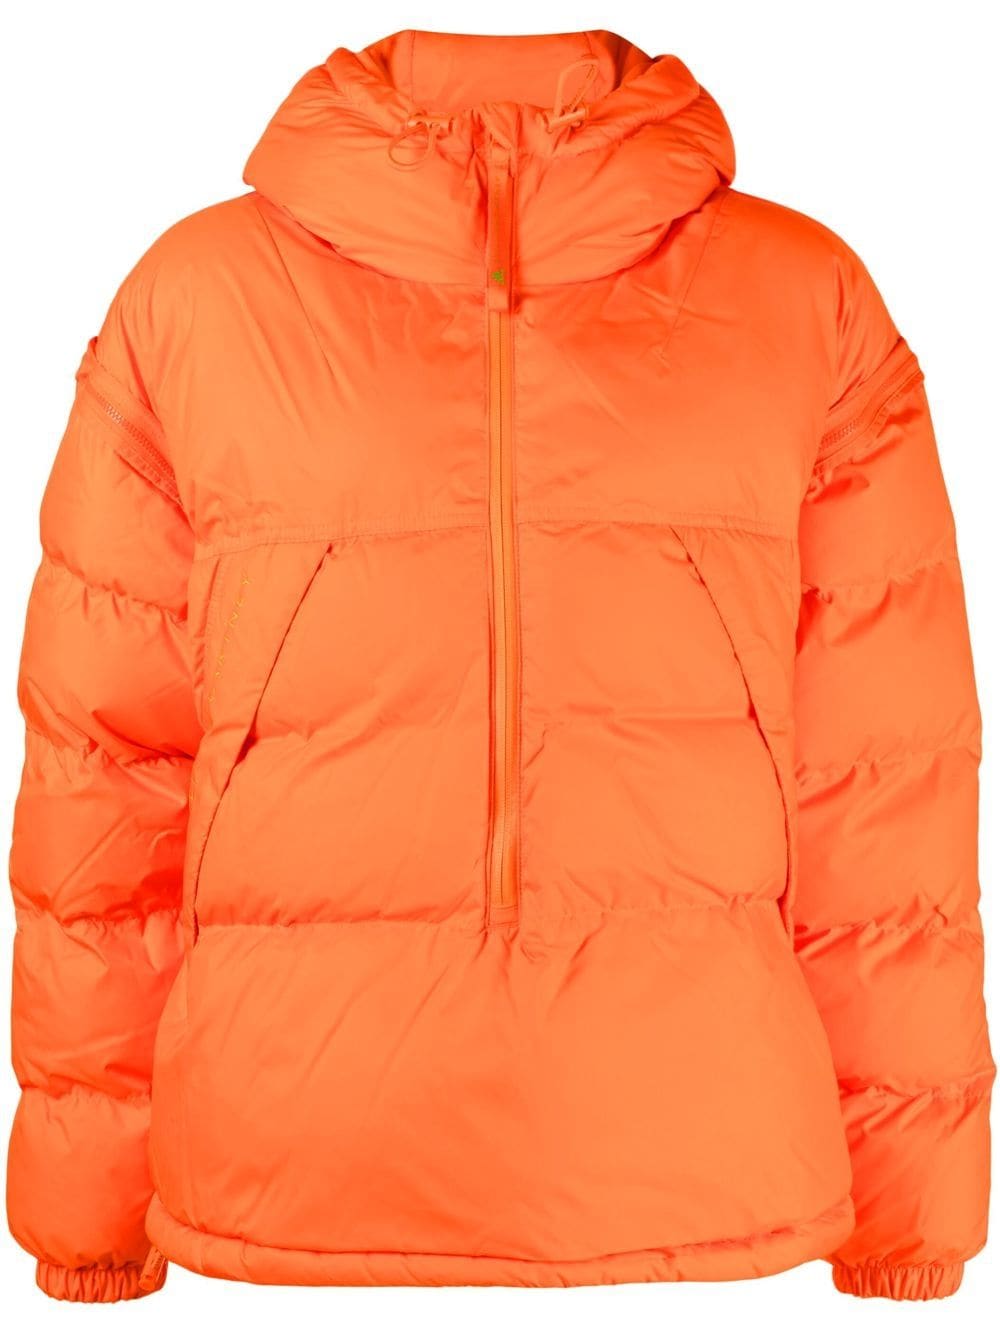 adidas by Stella McCartney half-zip hooded puffer jacket - Orange